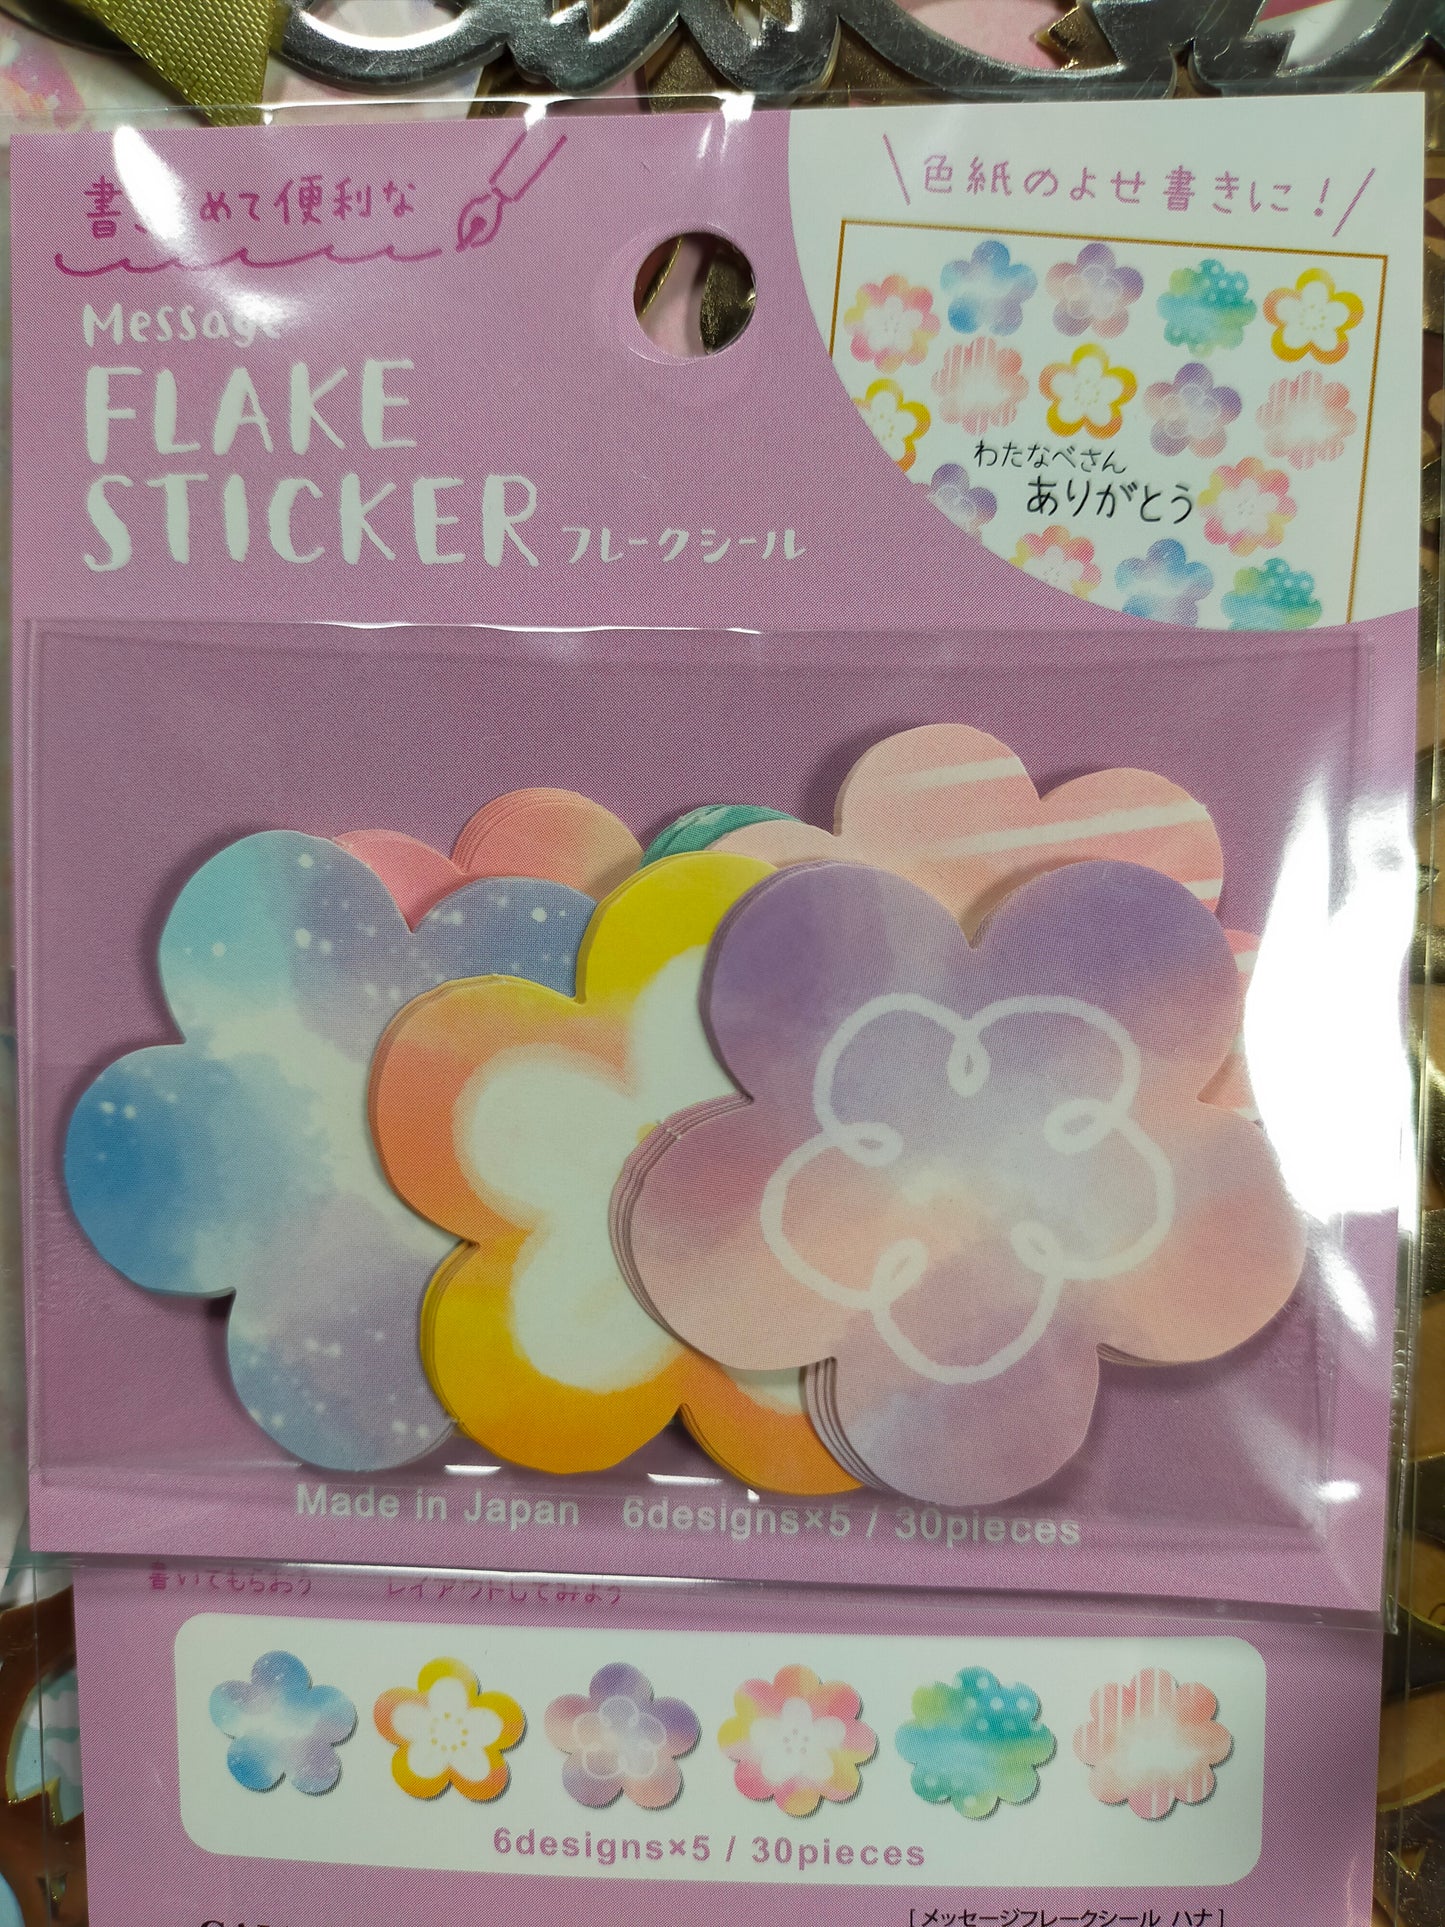 Flake Sticker Message Sticker 6designs*5pieces,GAIA _ Heart / Circle / Square / Flower